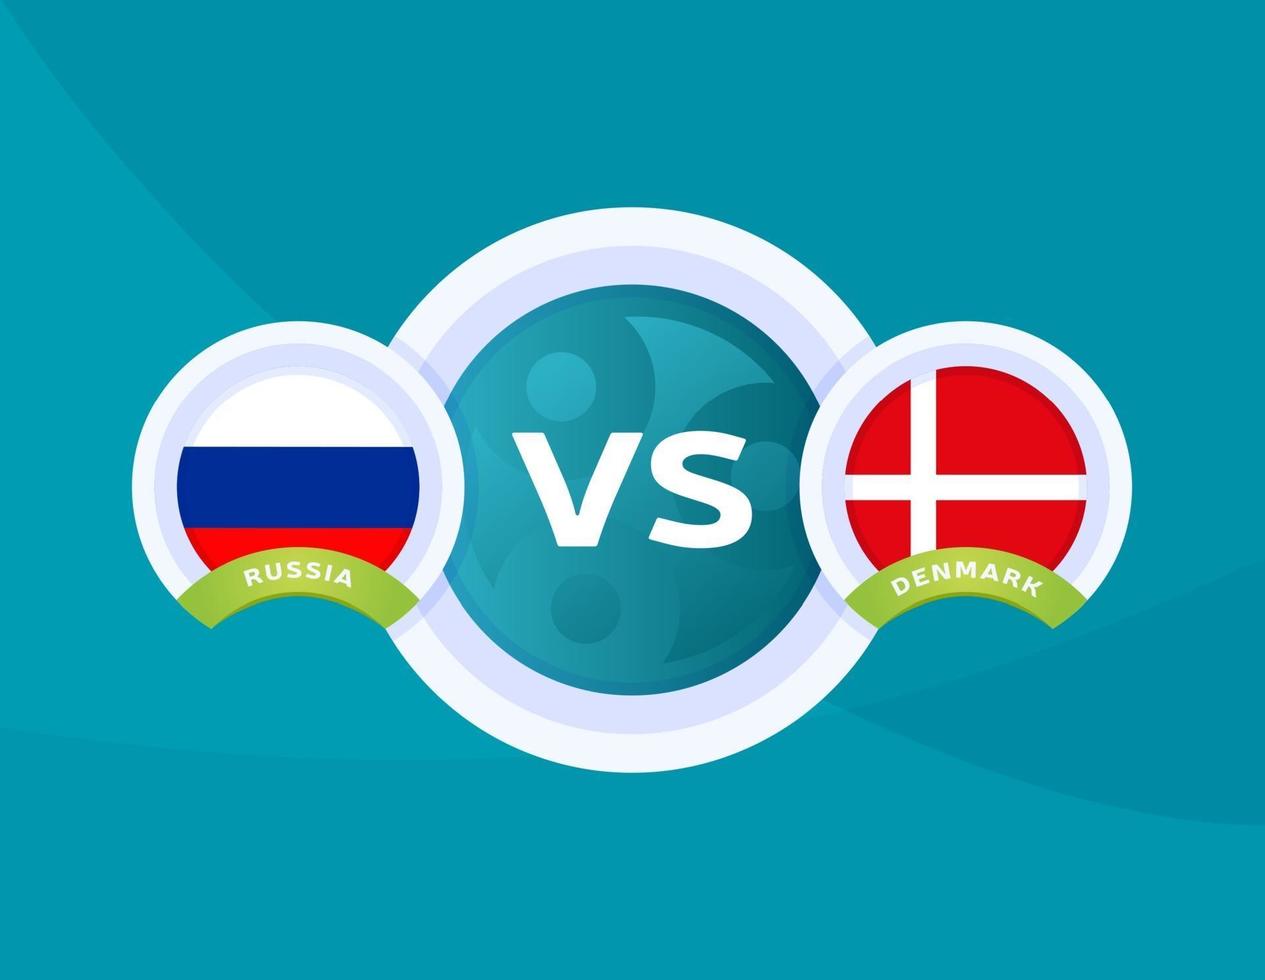 Vs russia denmark Denmark vs